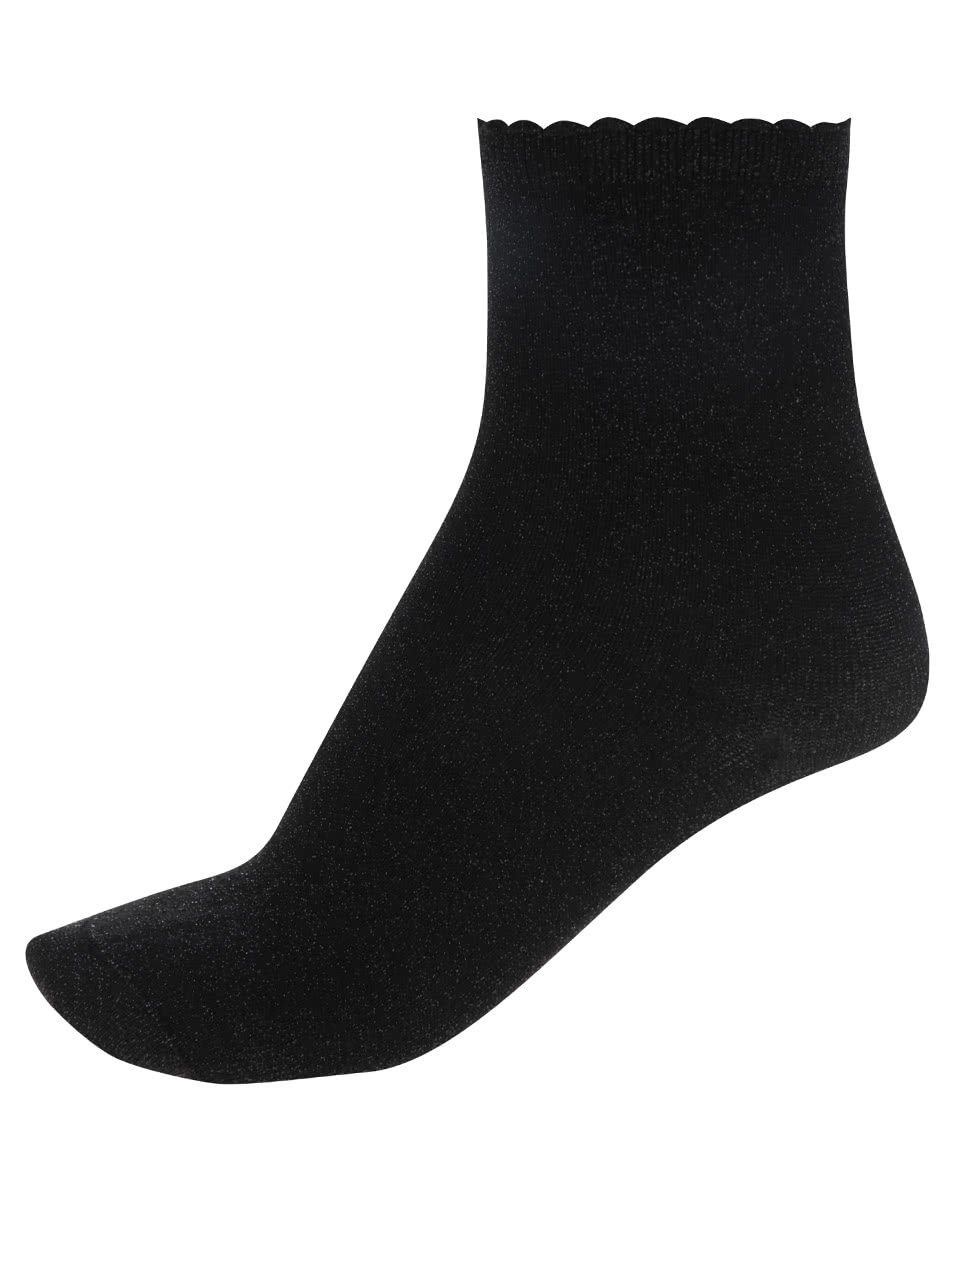 Černé třpytivé ponožky Pieces Sebby